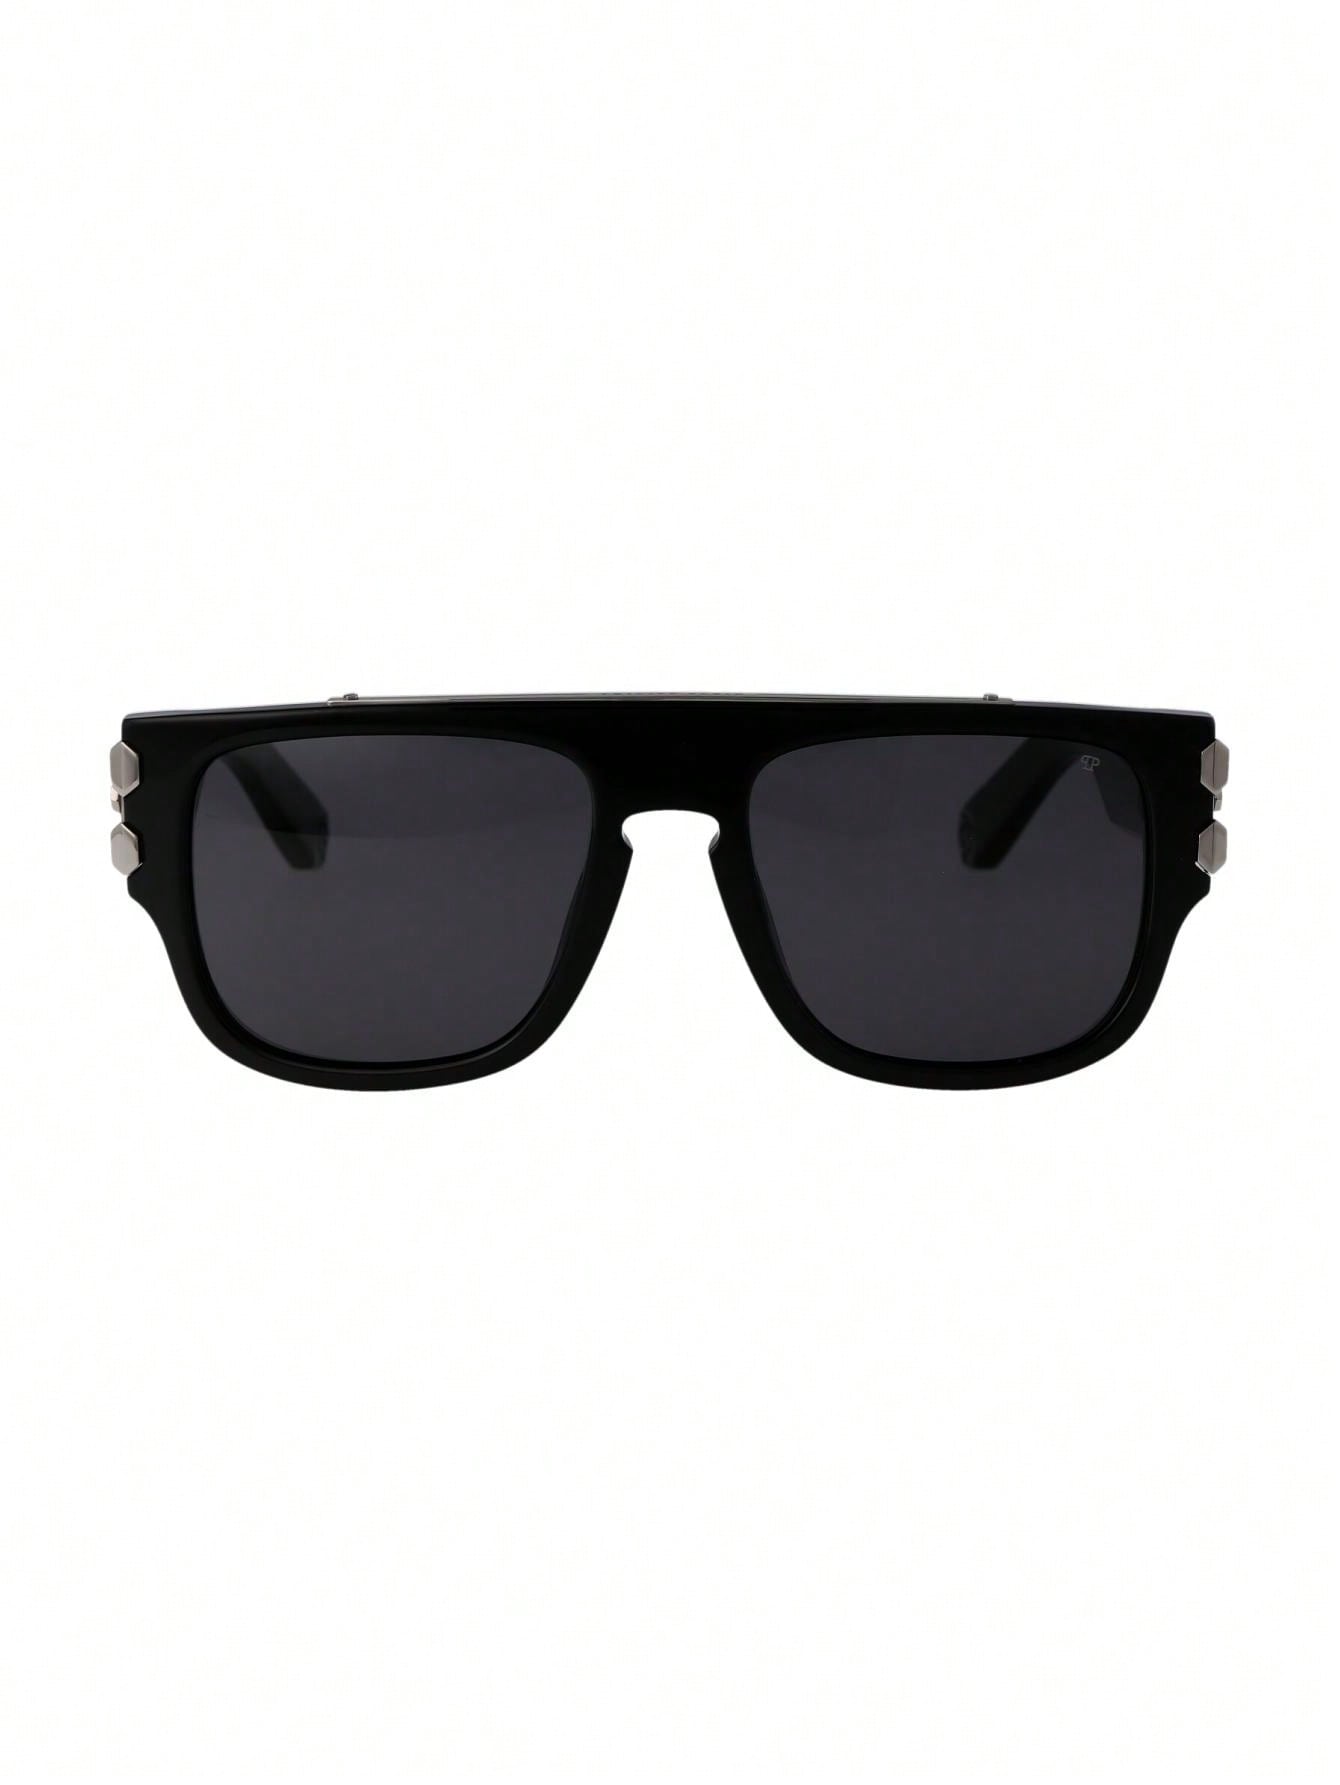 Мужские солнцезащитные очки Philipp Plein DECOR SPP011X0700, многоцветный солнцезащитные очки philipp plein 025s 700